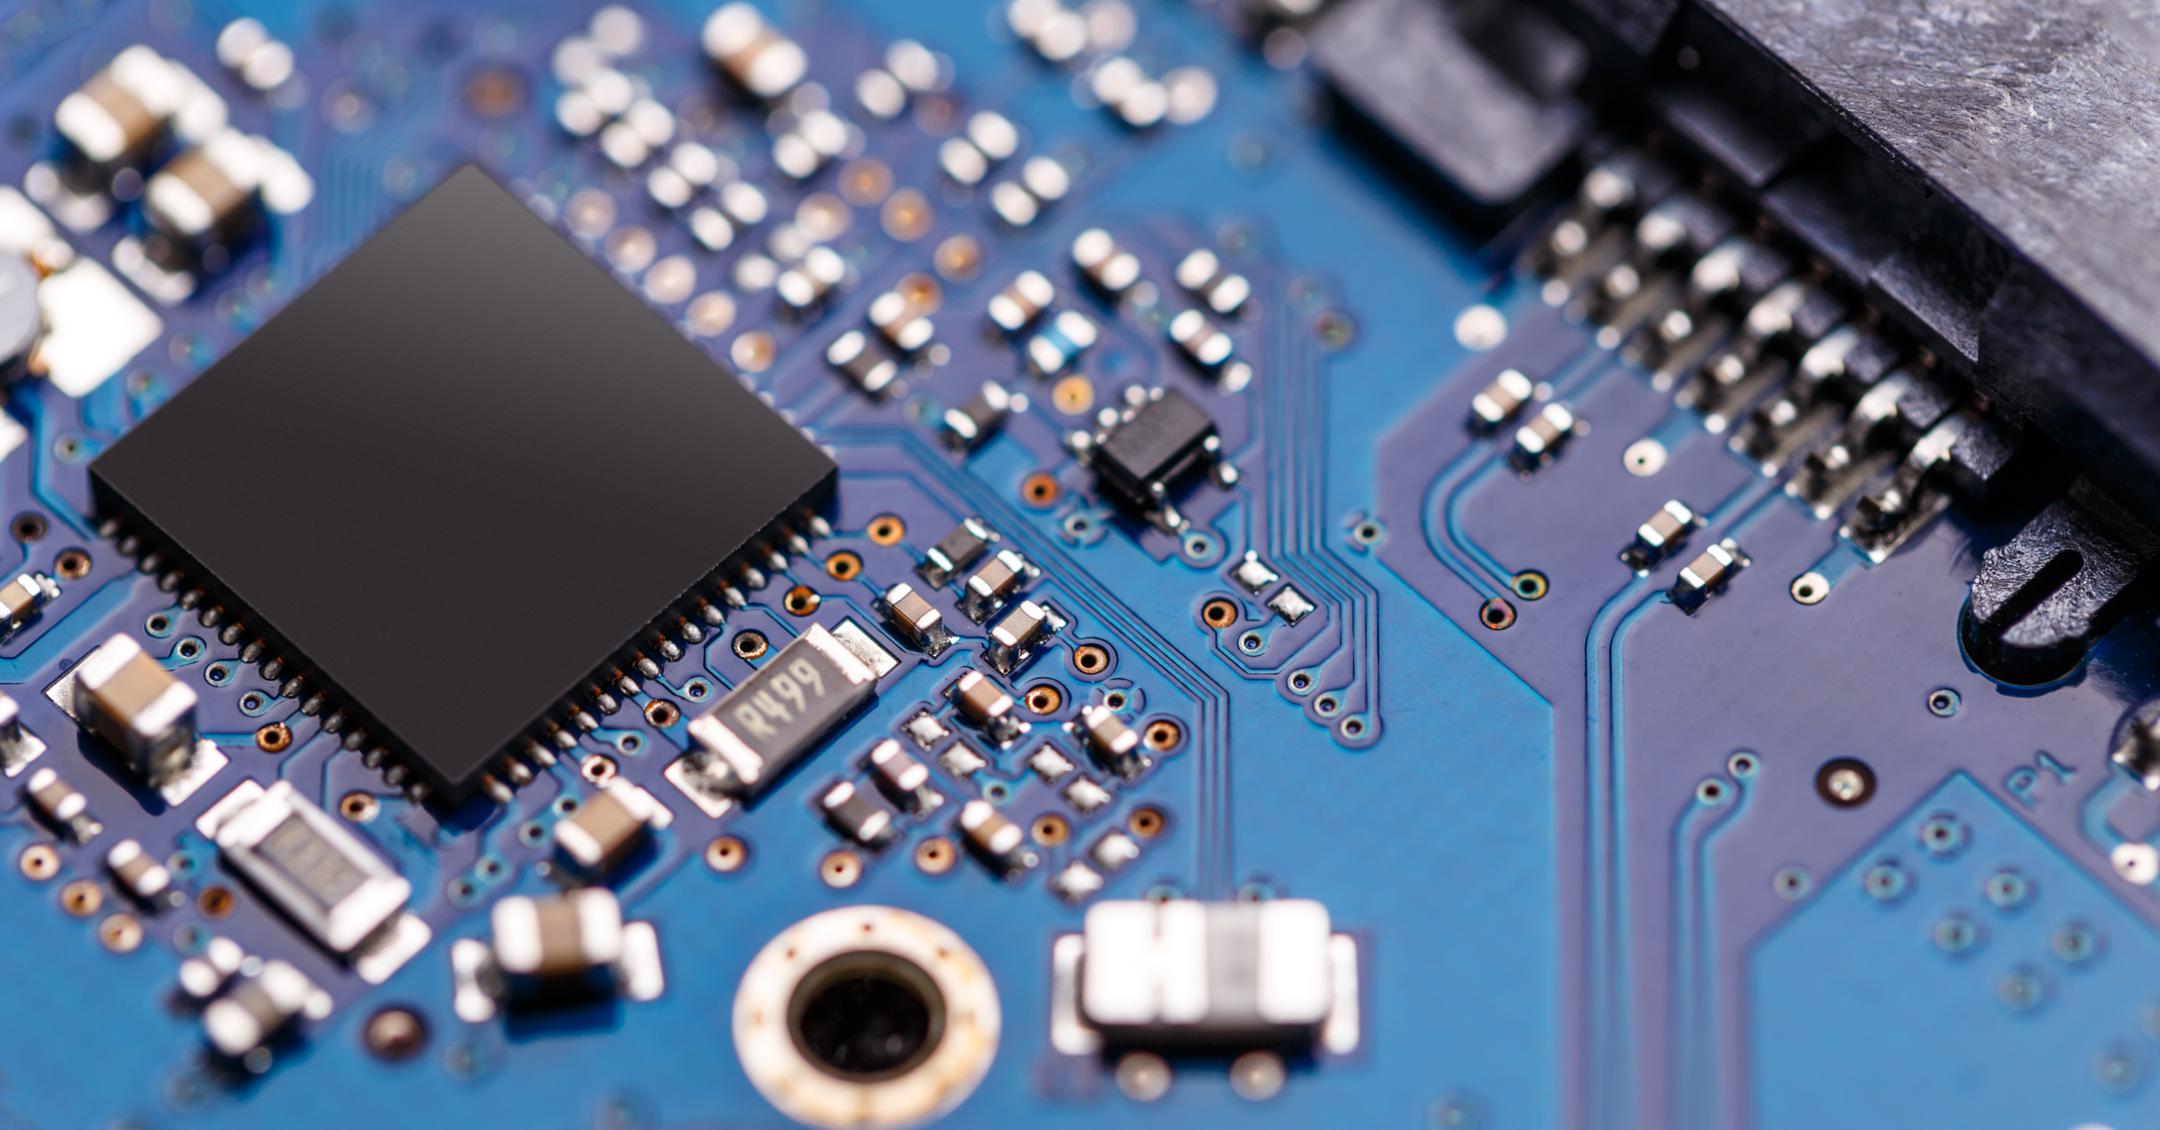 Micron: Q4 Earnings Send Semiconductor Stocks Lower